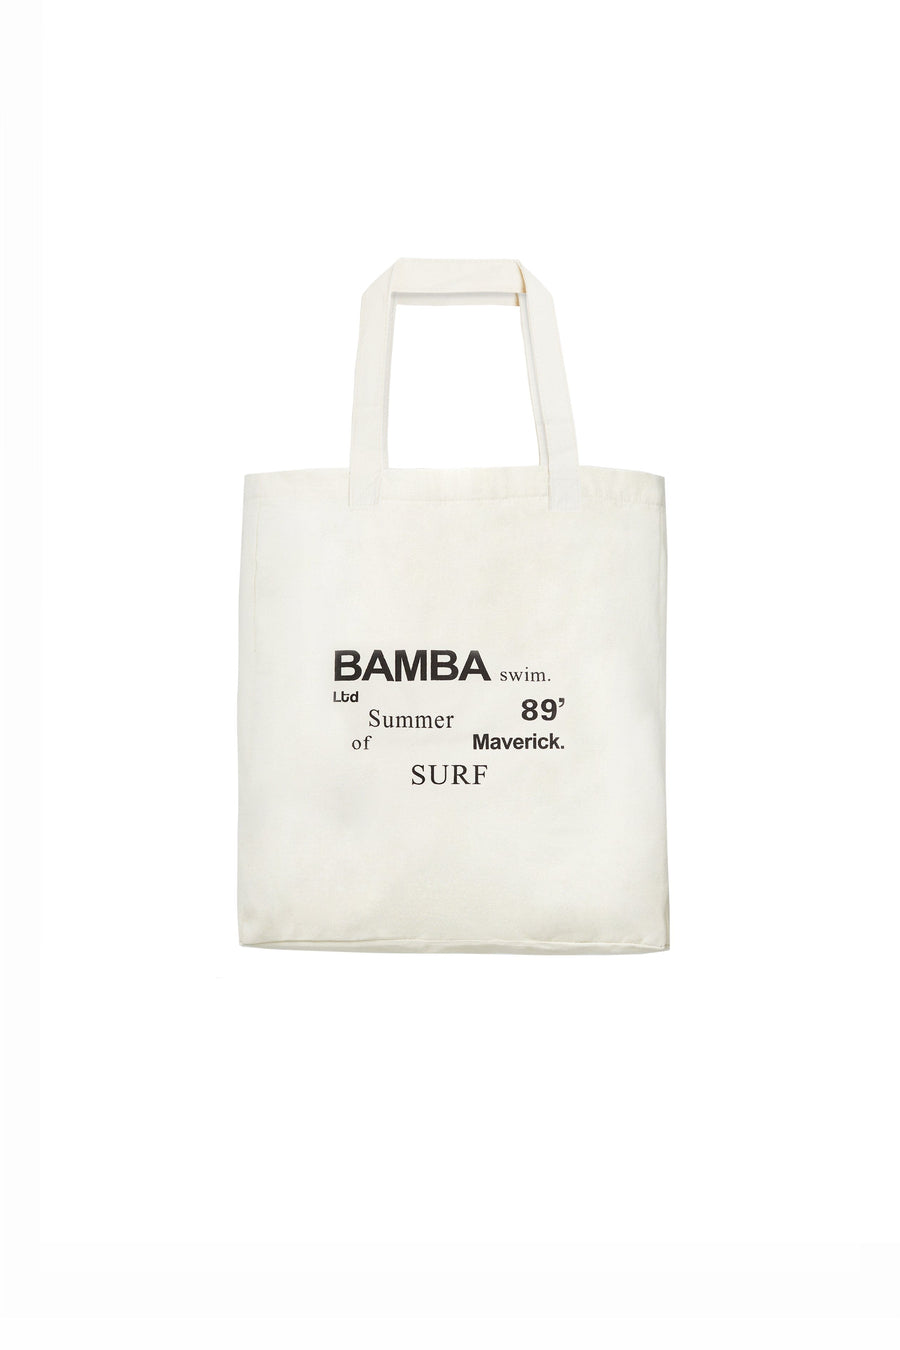 BAMBA SIGNATURE tote bag  -  ACCESSORIES  -  B Ā M B A S W I M